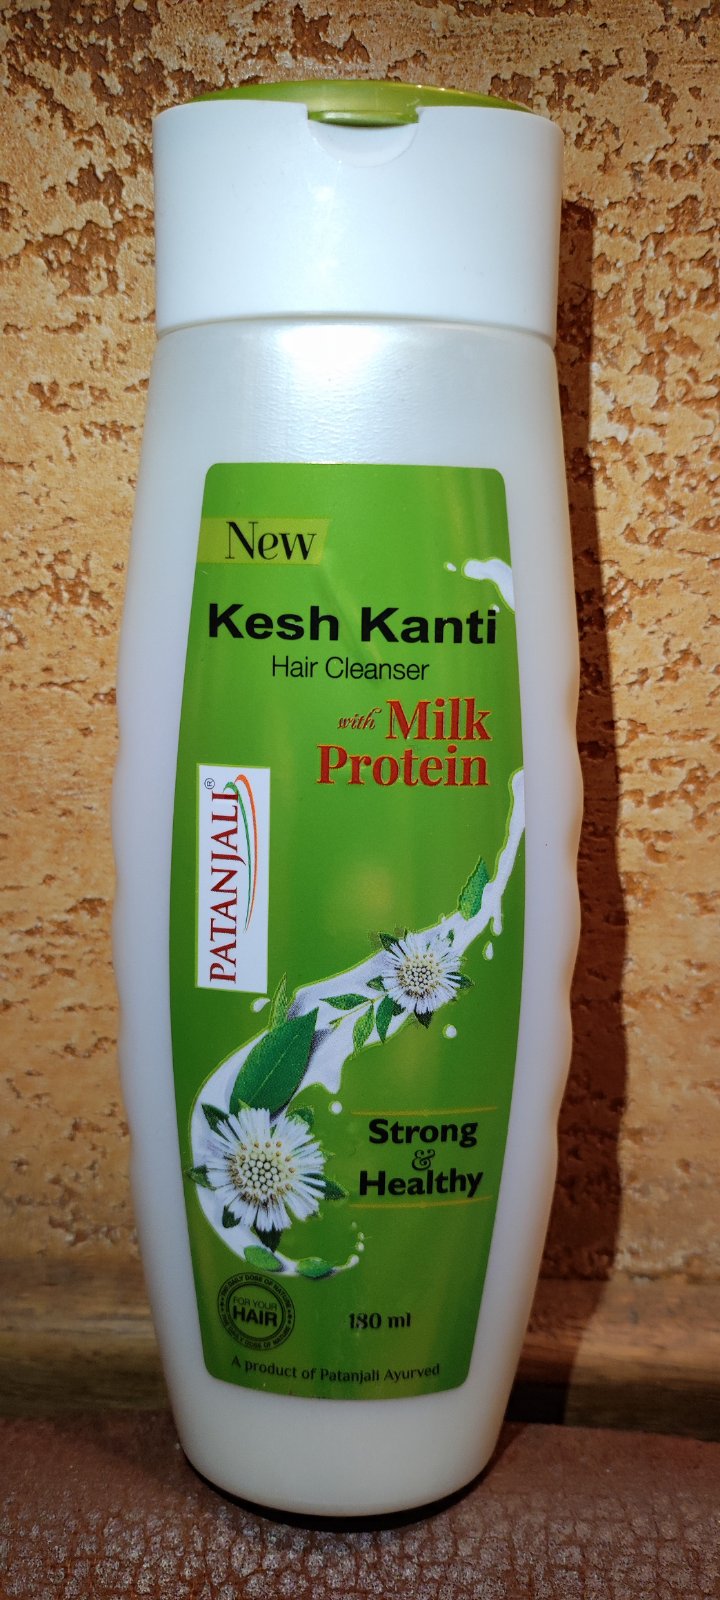 Шампунь Патанджали с молочным протеином Кеш канти Hair Cleanser Milk protein Патанджали аюрведа Kesh Kanti Patanjali 180 мл.